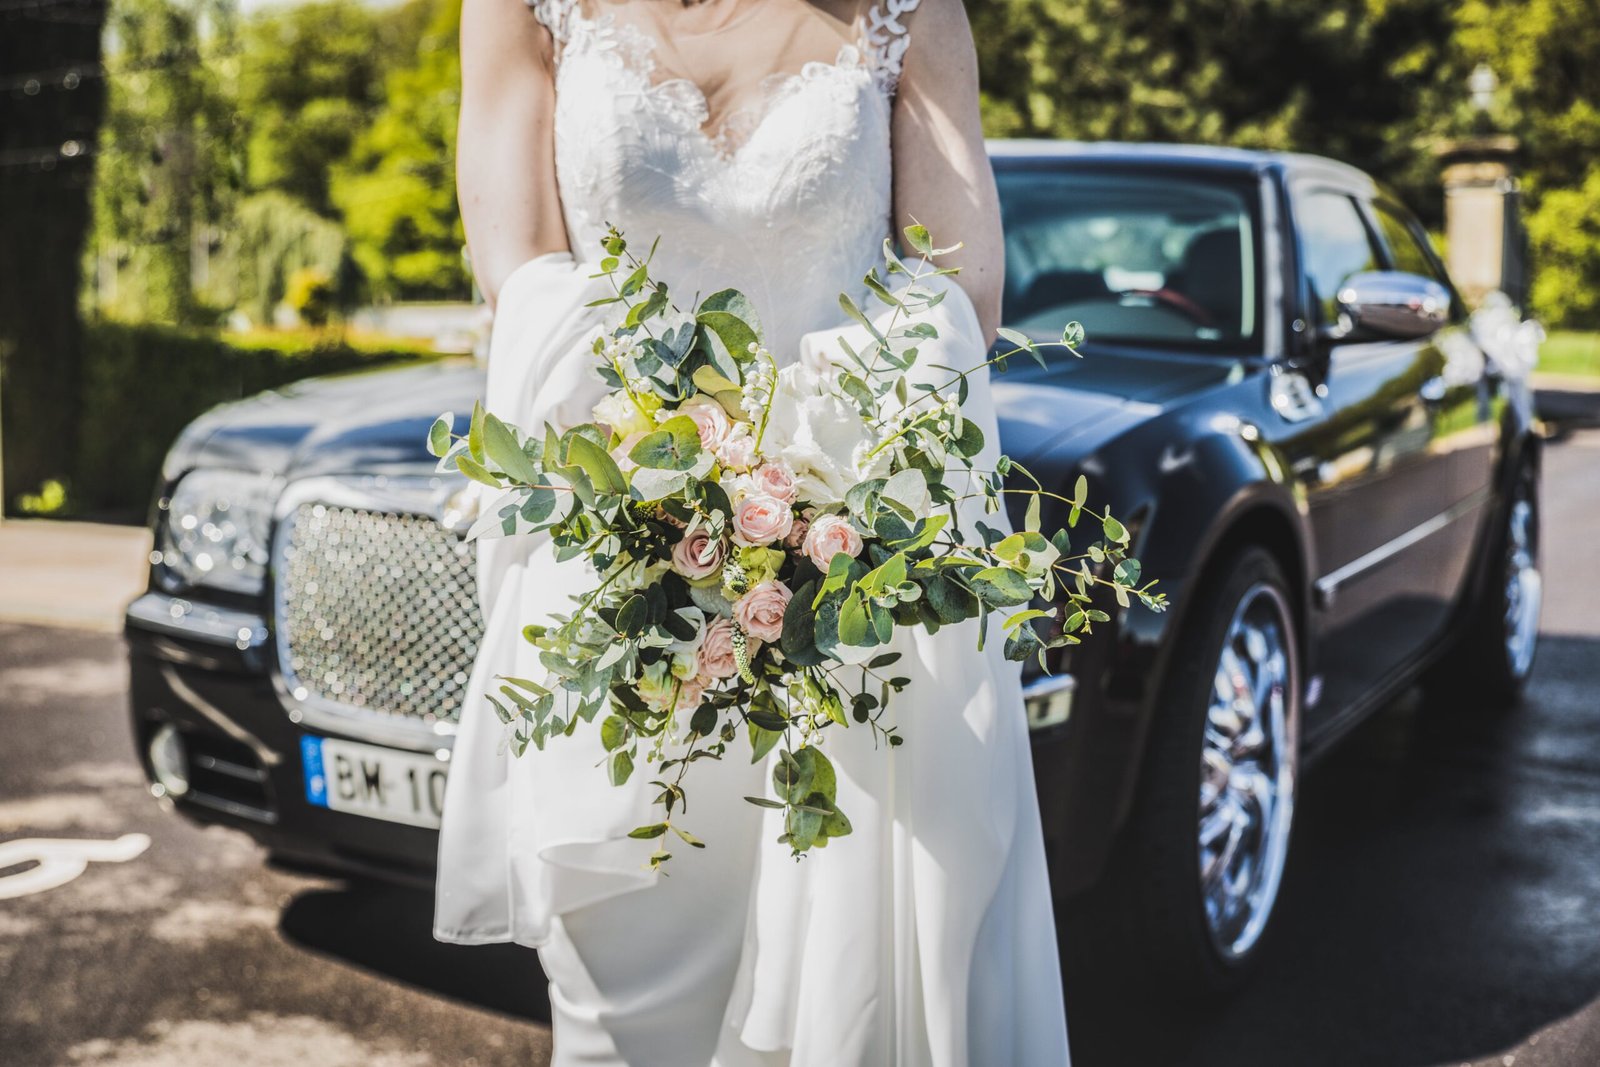 Choosing best chauffeur service for weddings in perth